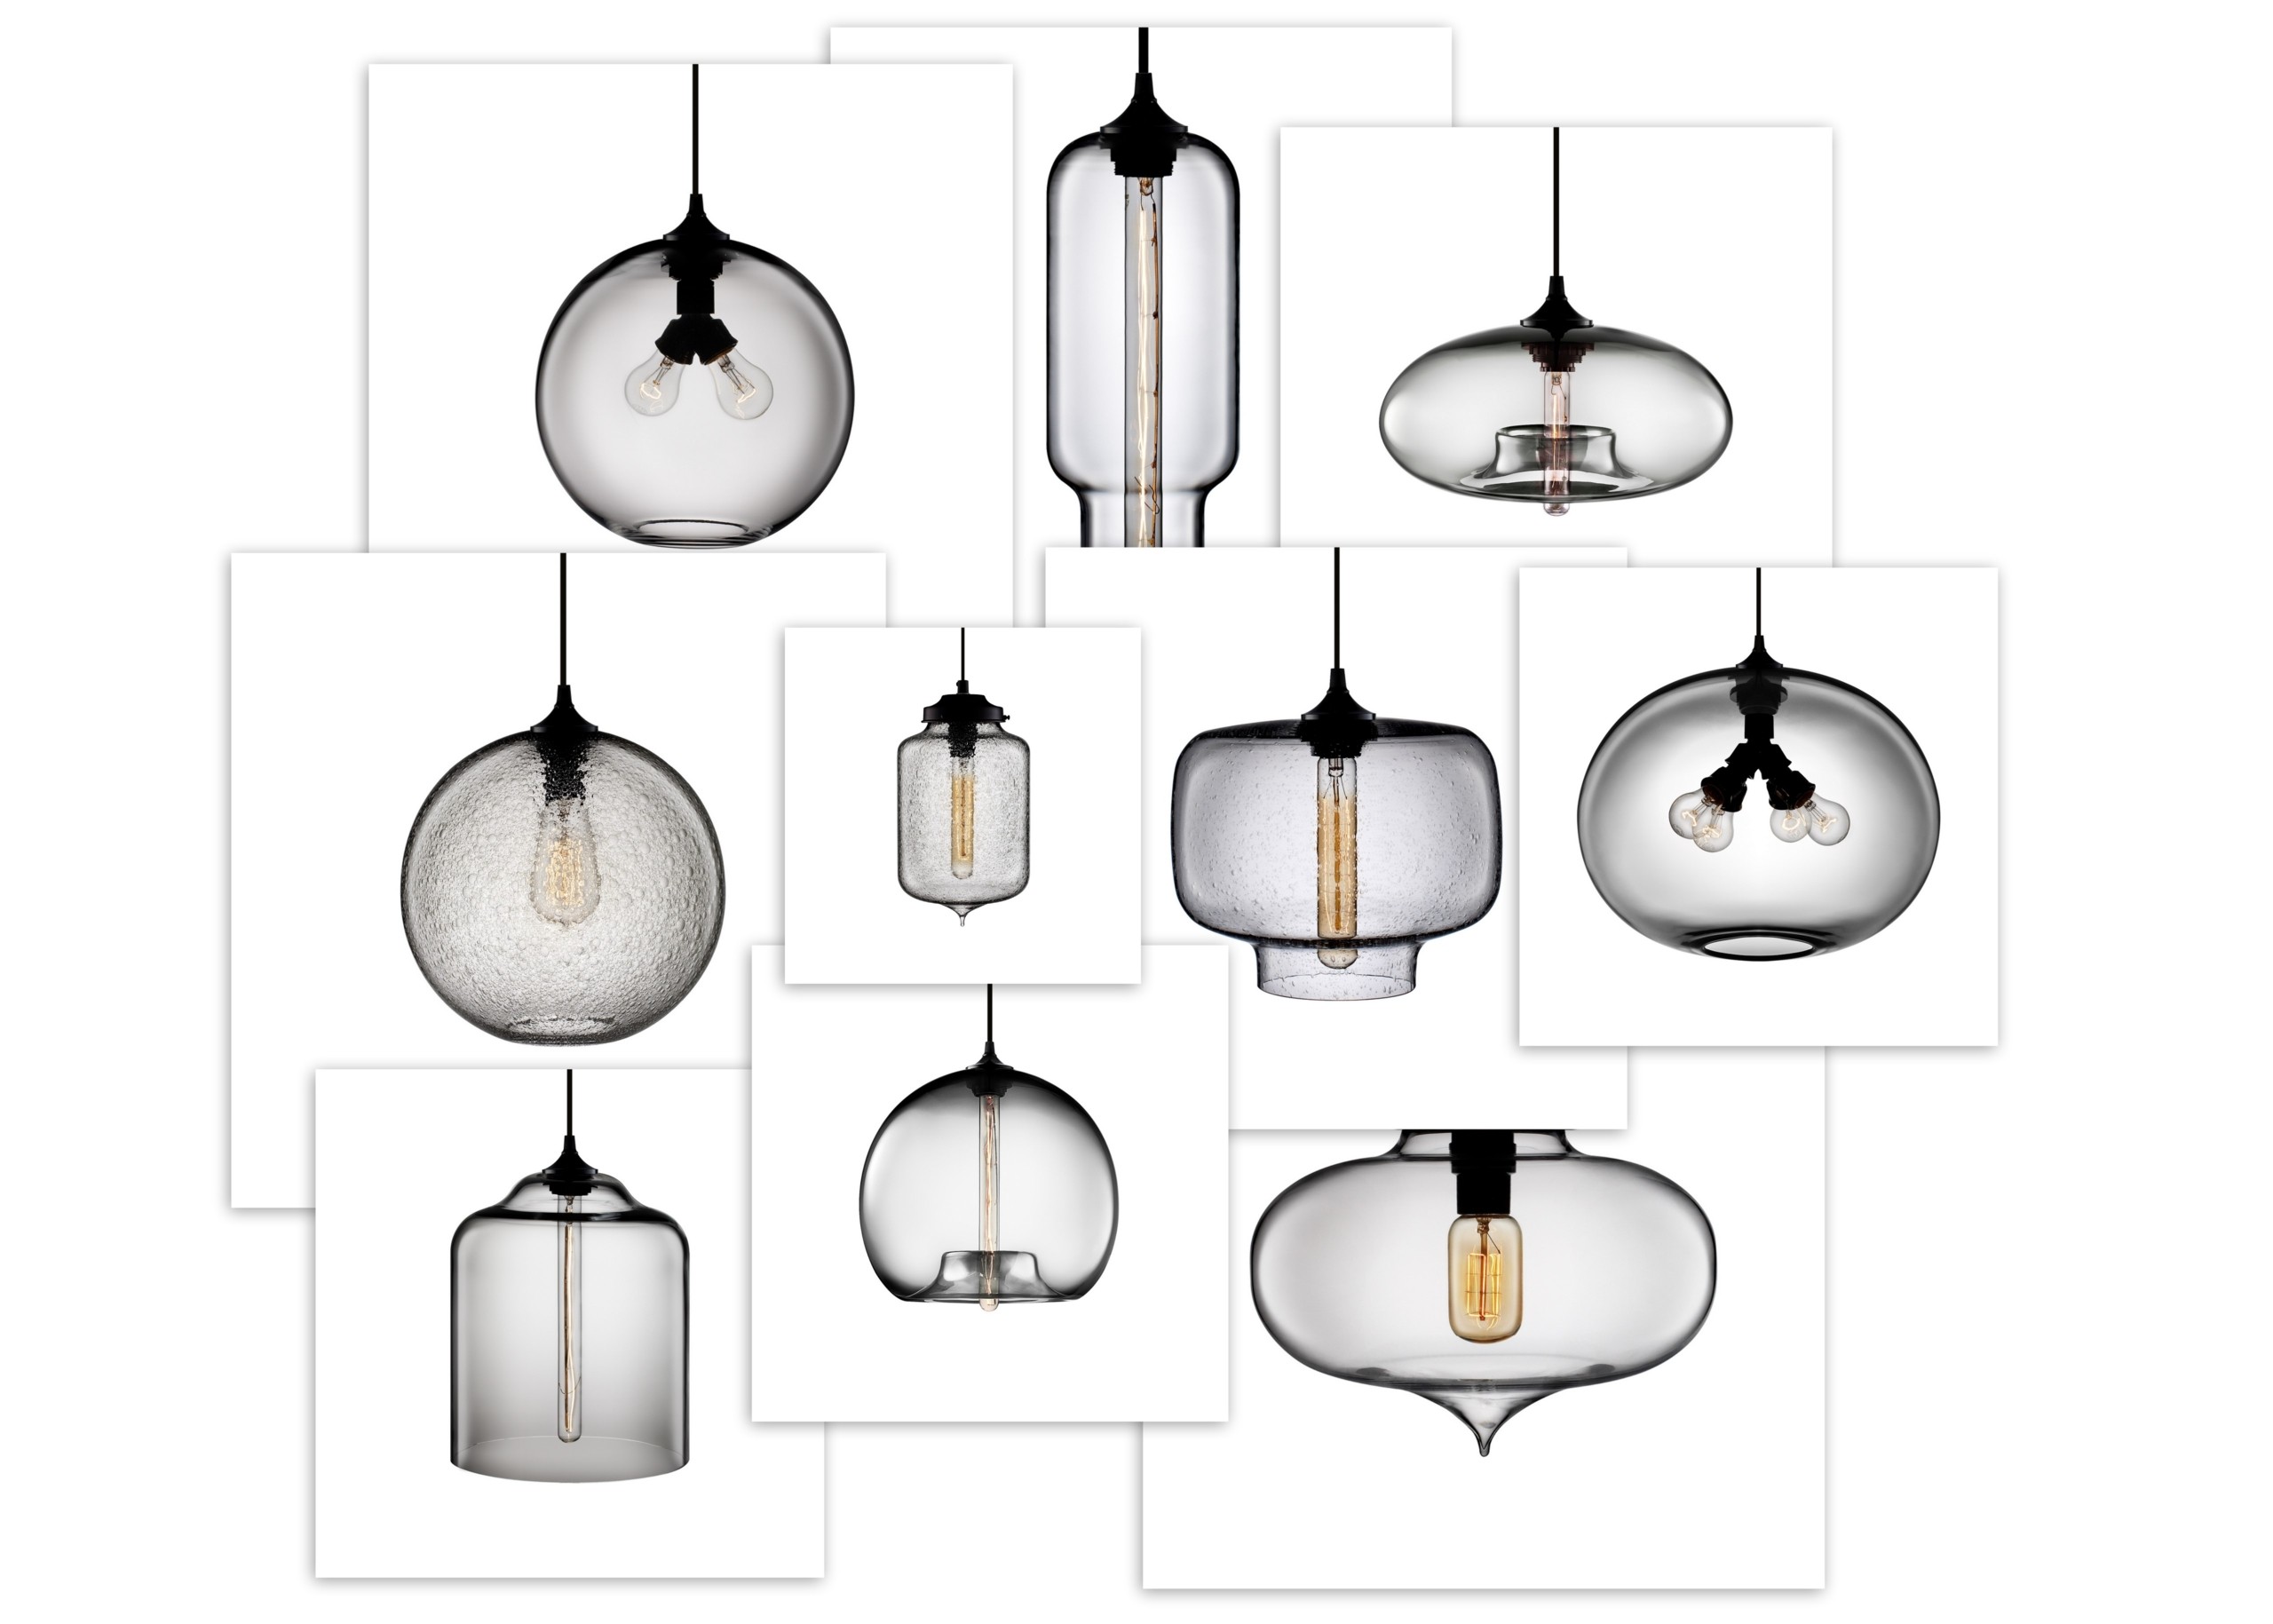 Blown glass pendant lights by jeremy pyles for niche modern